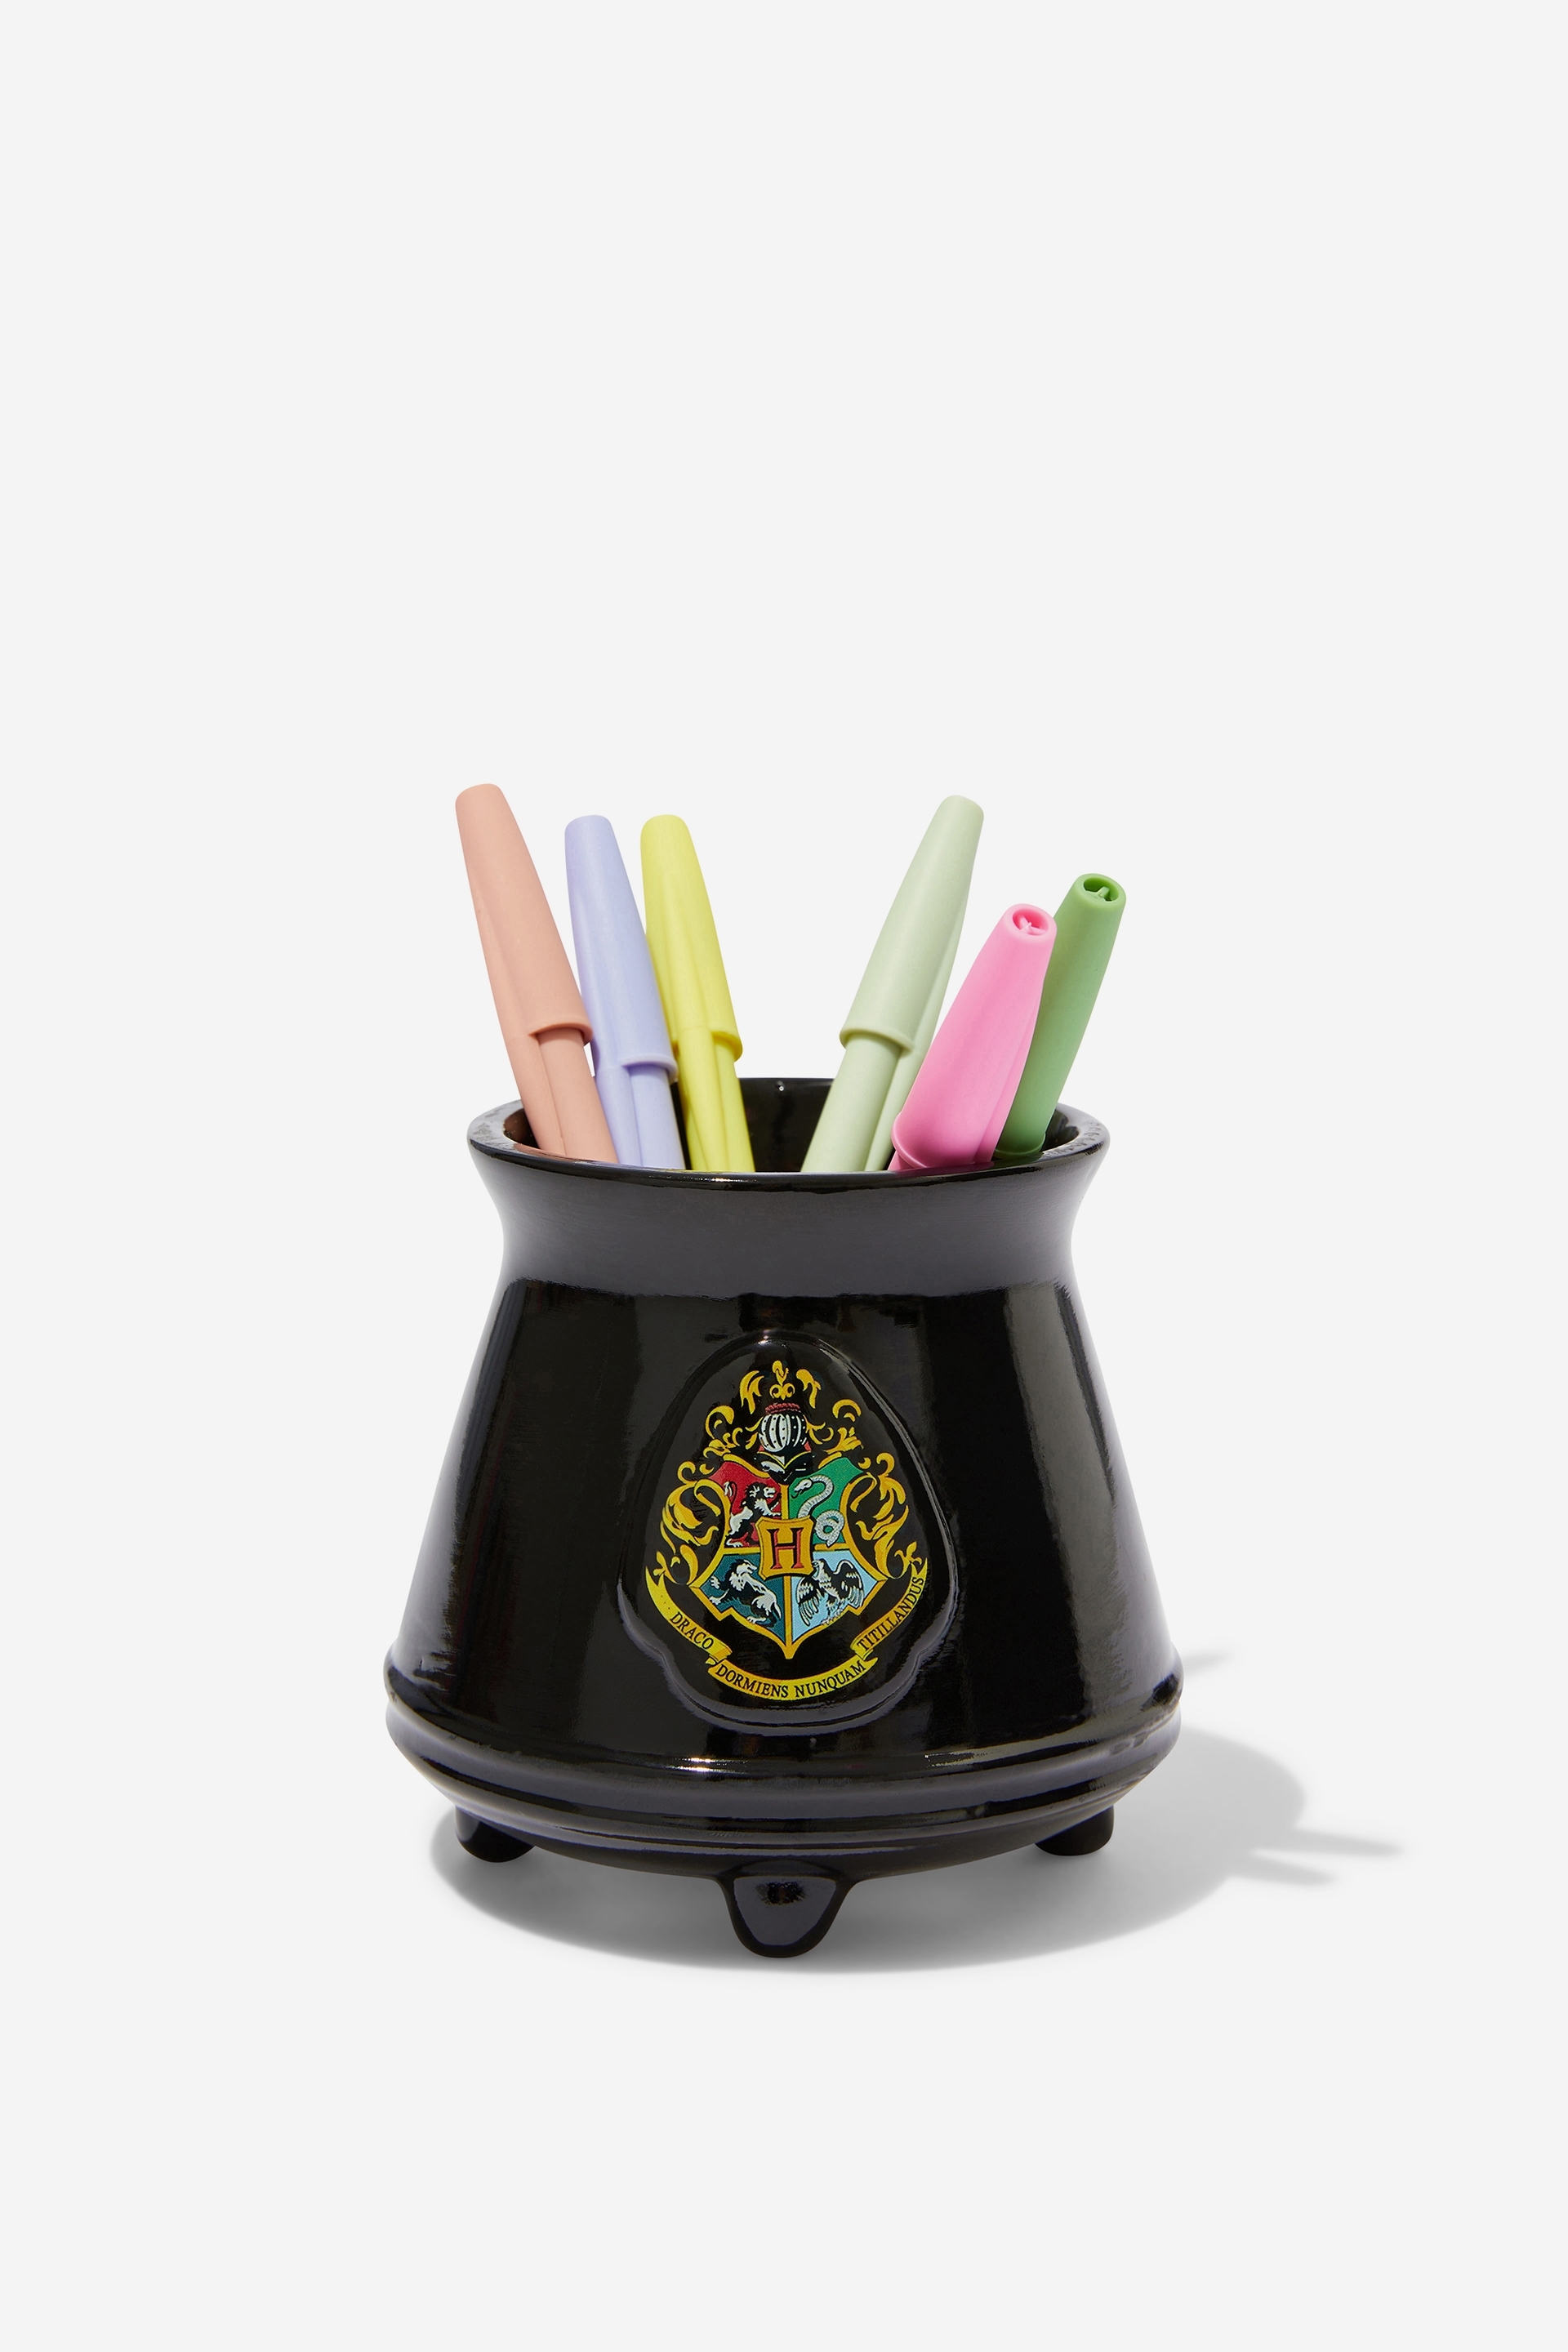 Harry Potter Office Accessories  Harry Potter Pen Holder Office - 8937  Penholder - Aliexpress